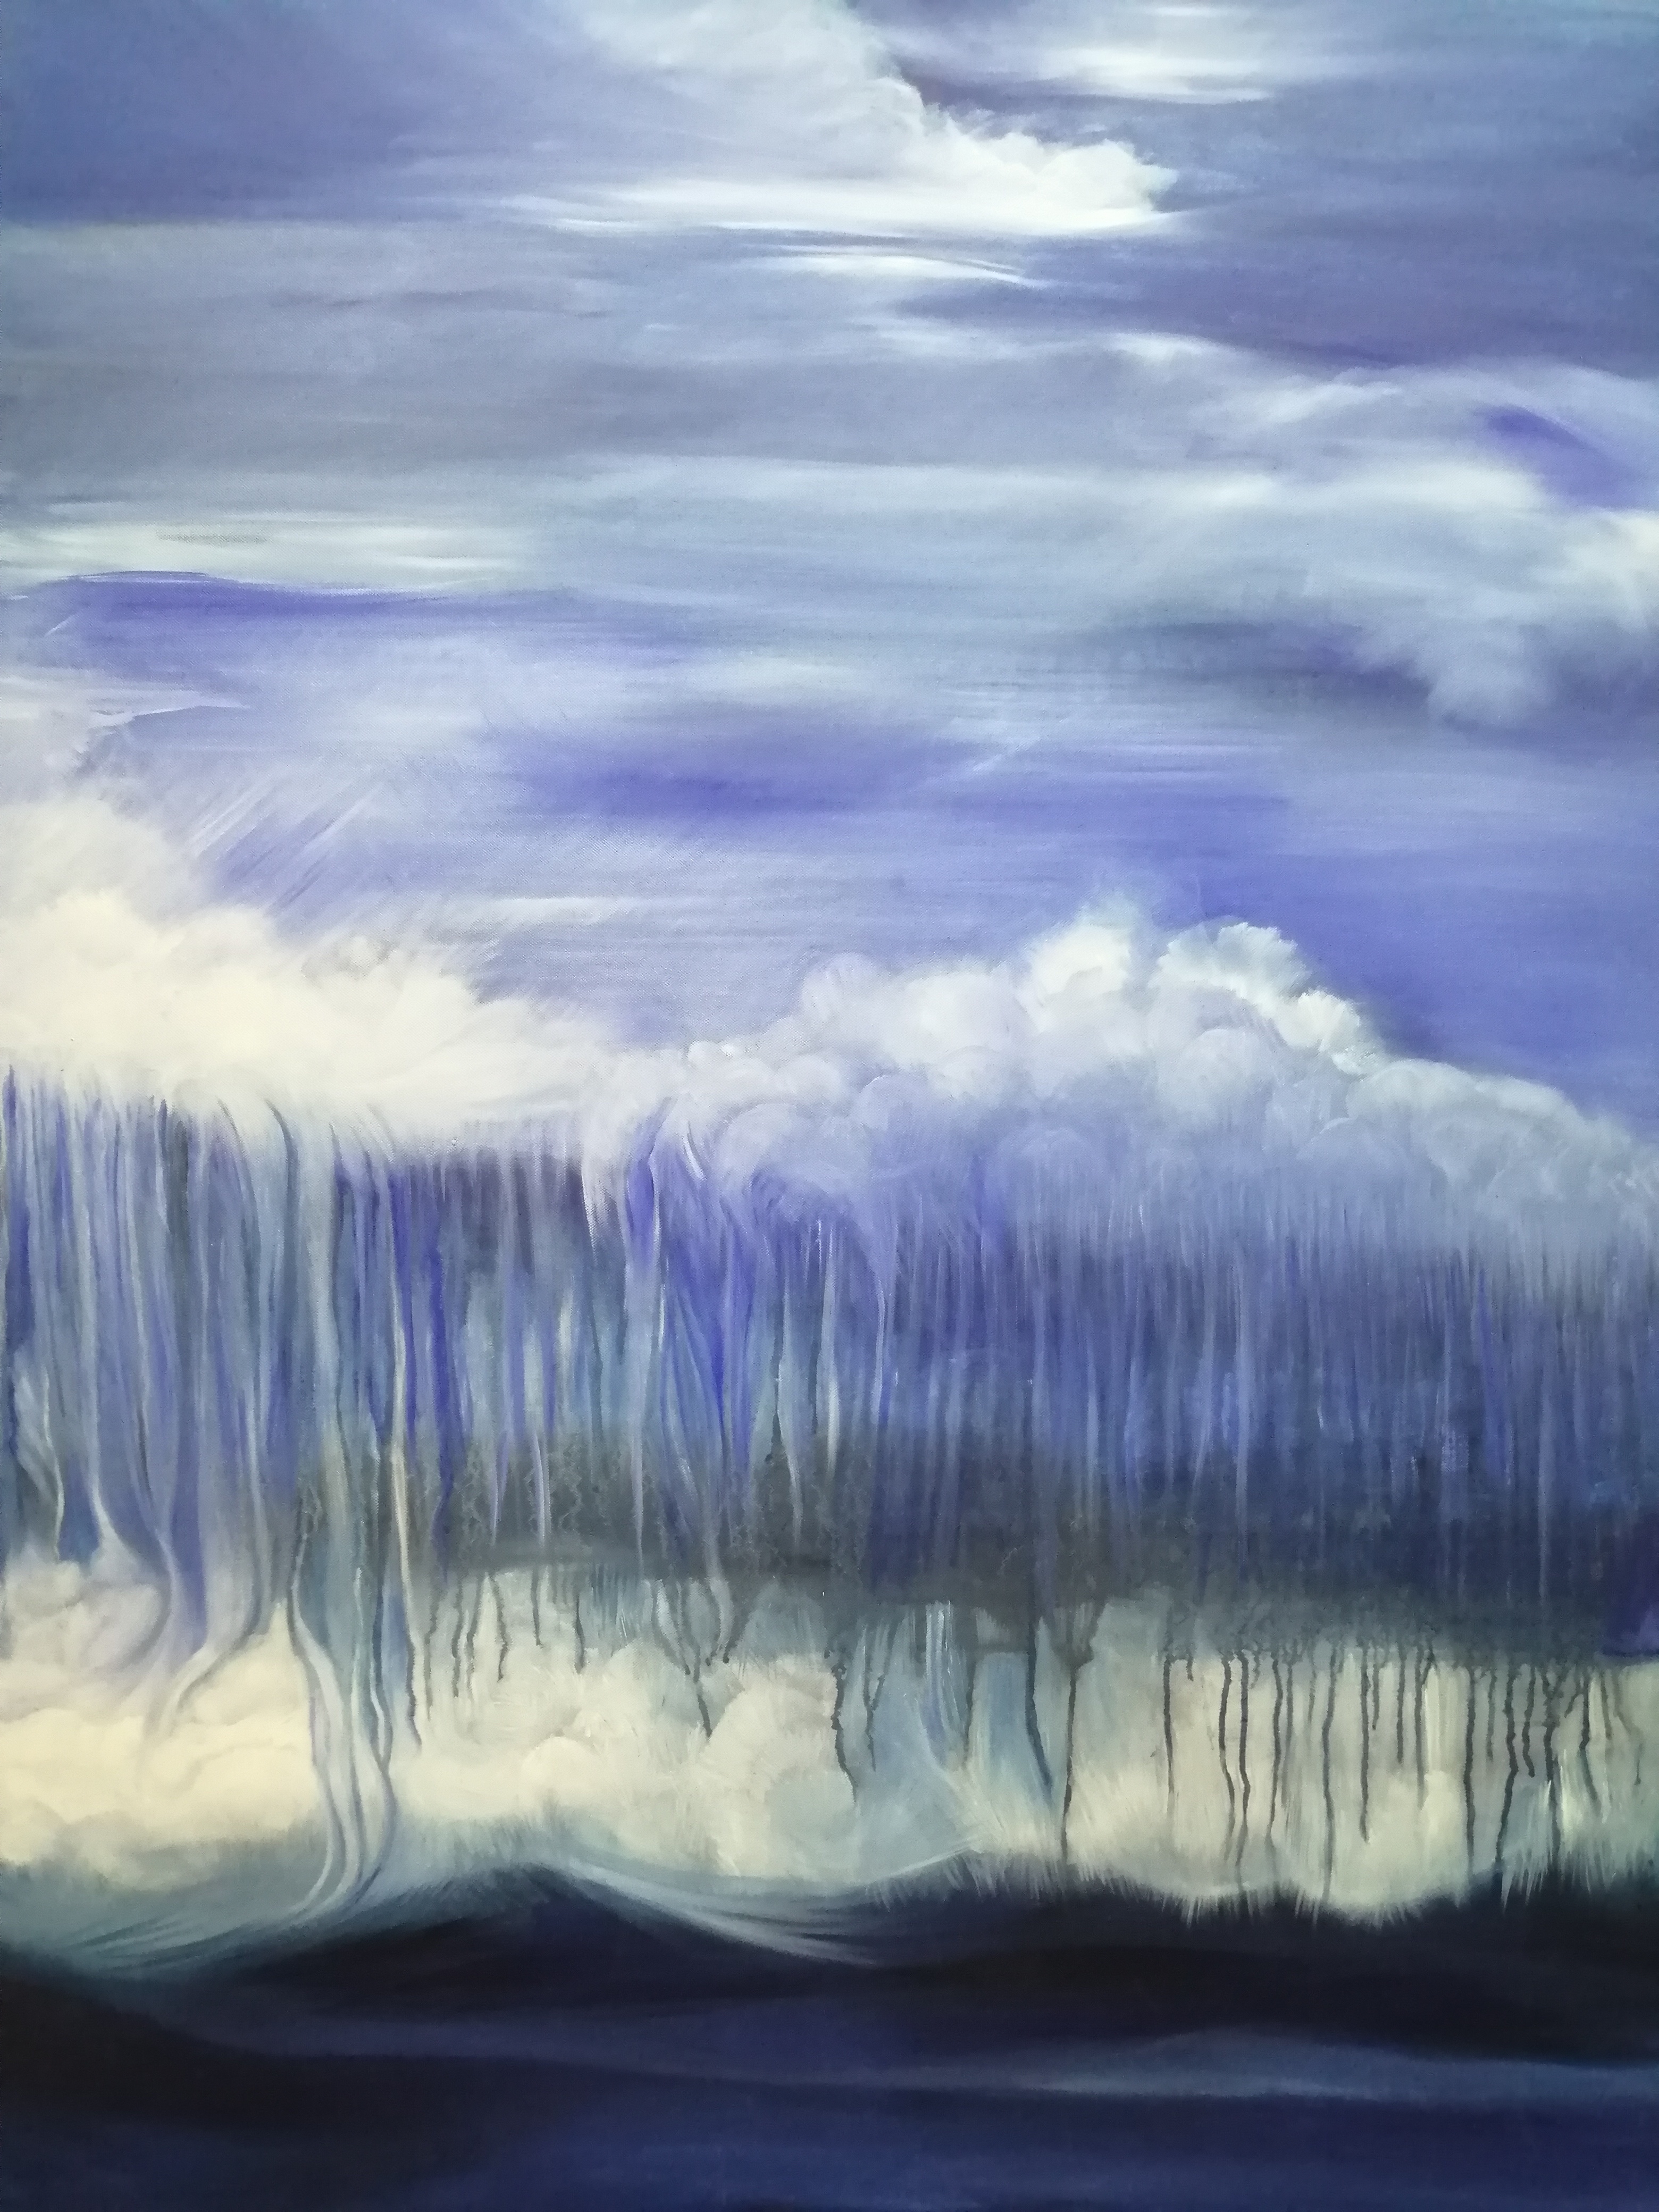 “Clouds” by Antoinette Schoeman